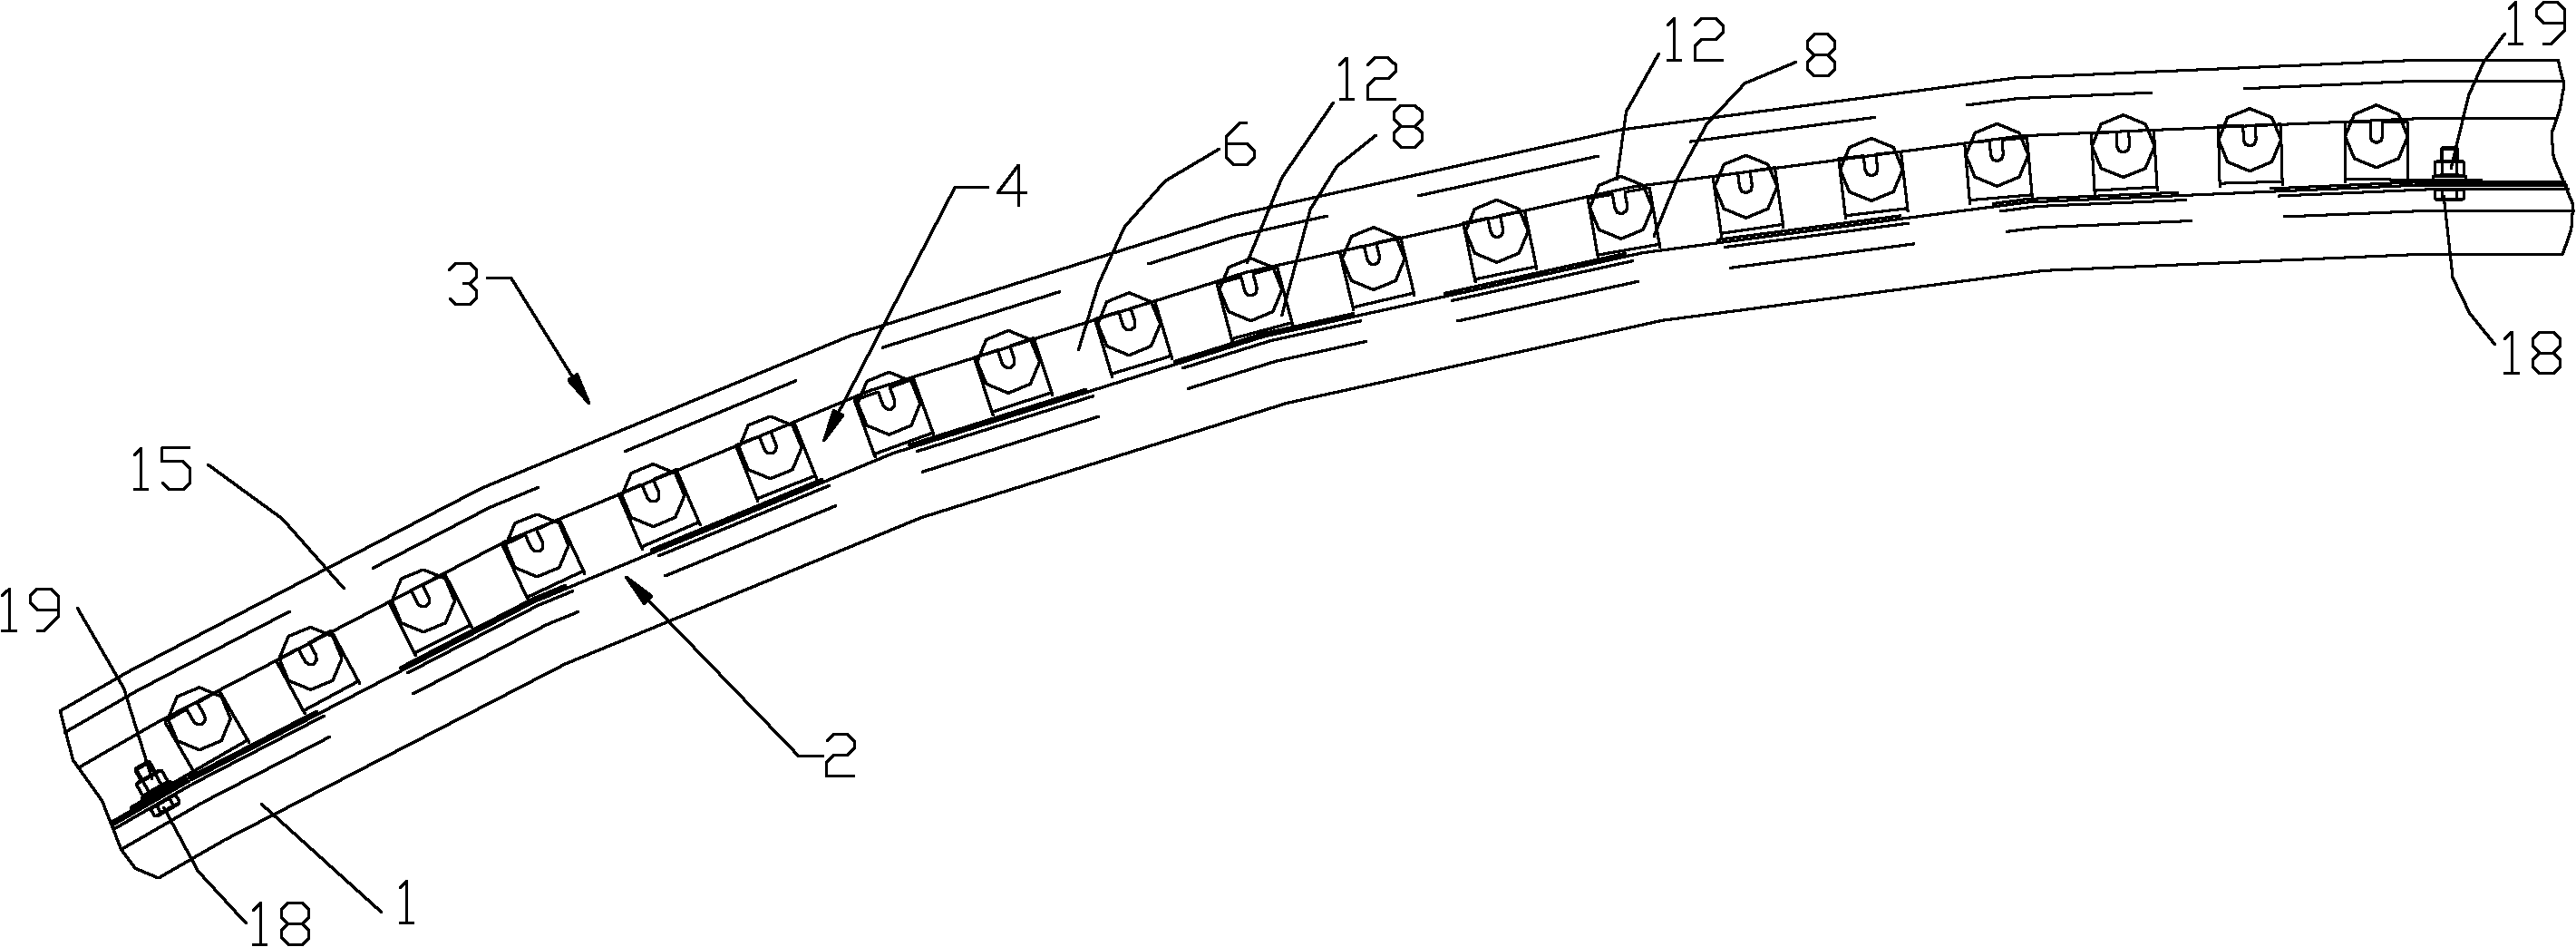 Upper arc-section structure of escalator handrail belt